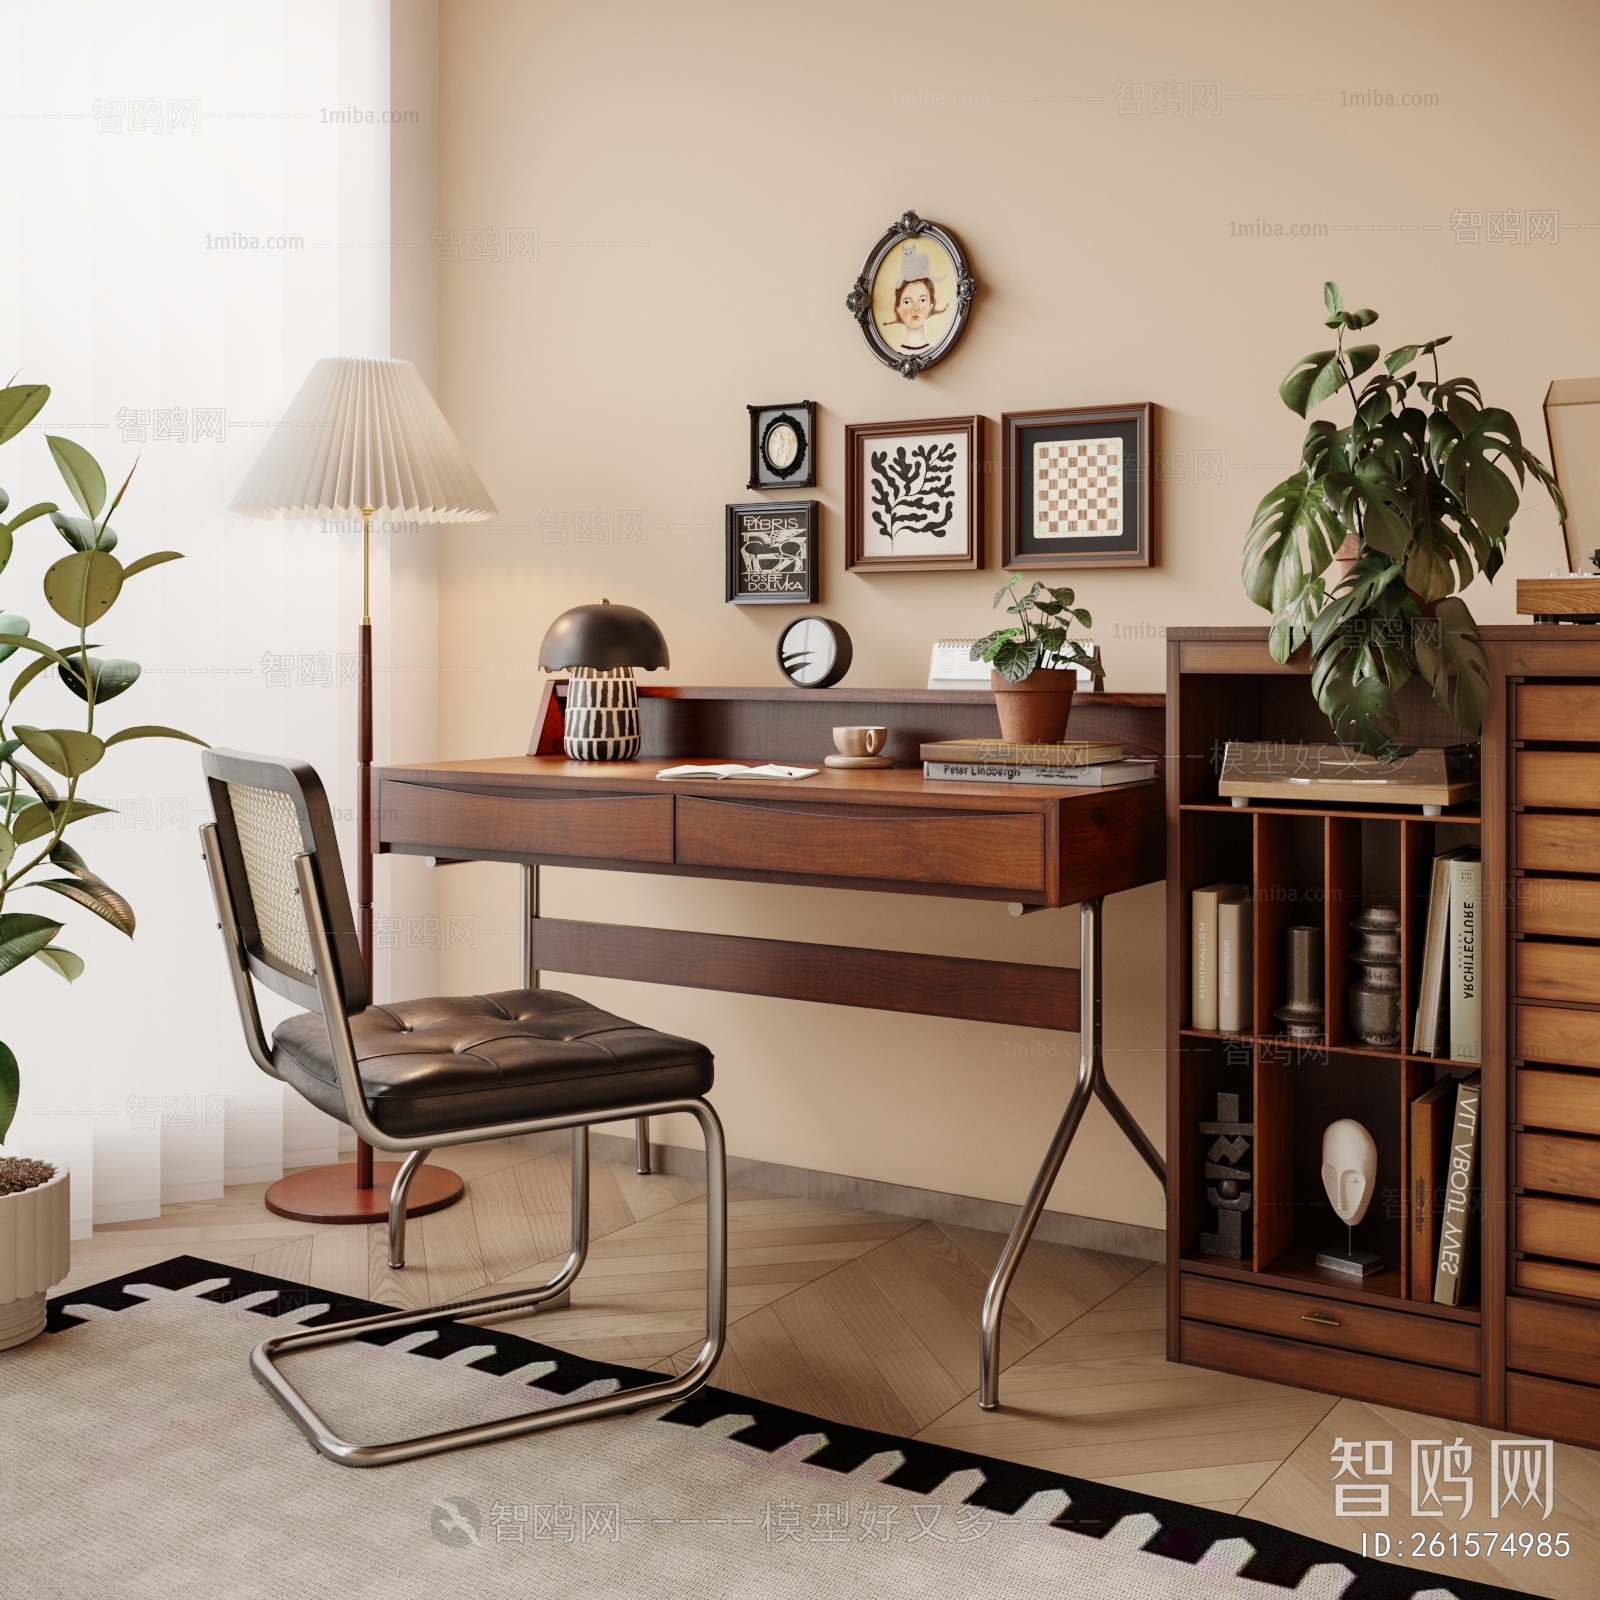 Modern Wabi-sabi Style Computer Desk And Chair